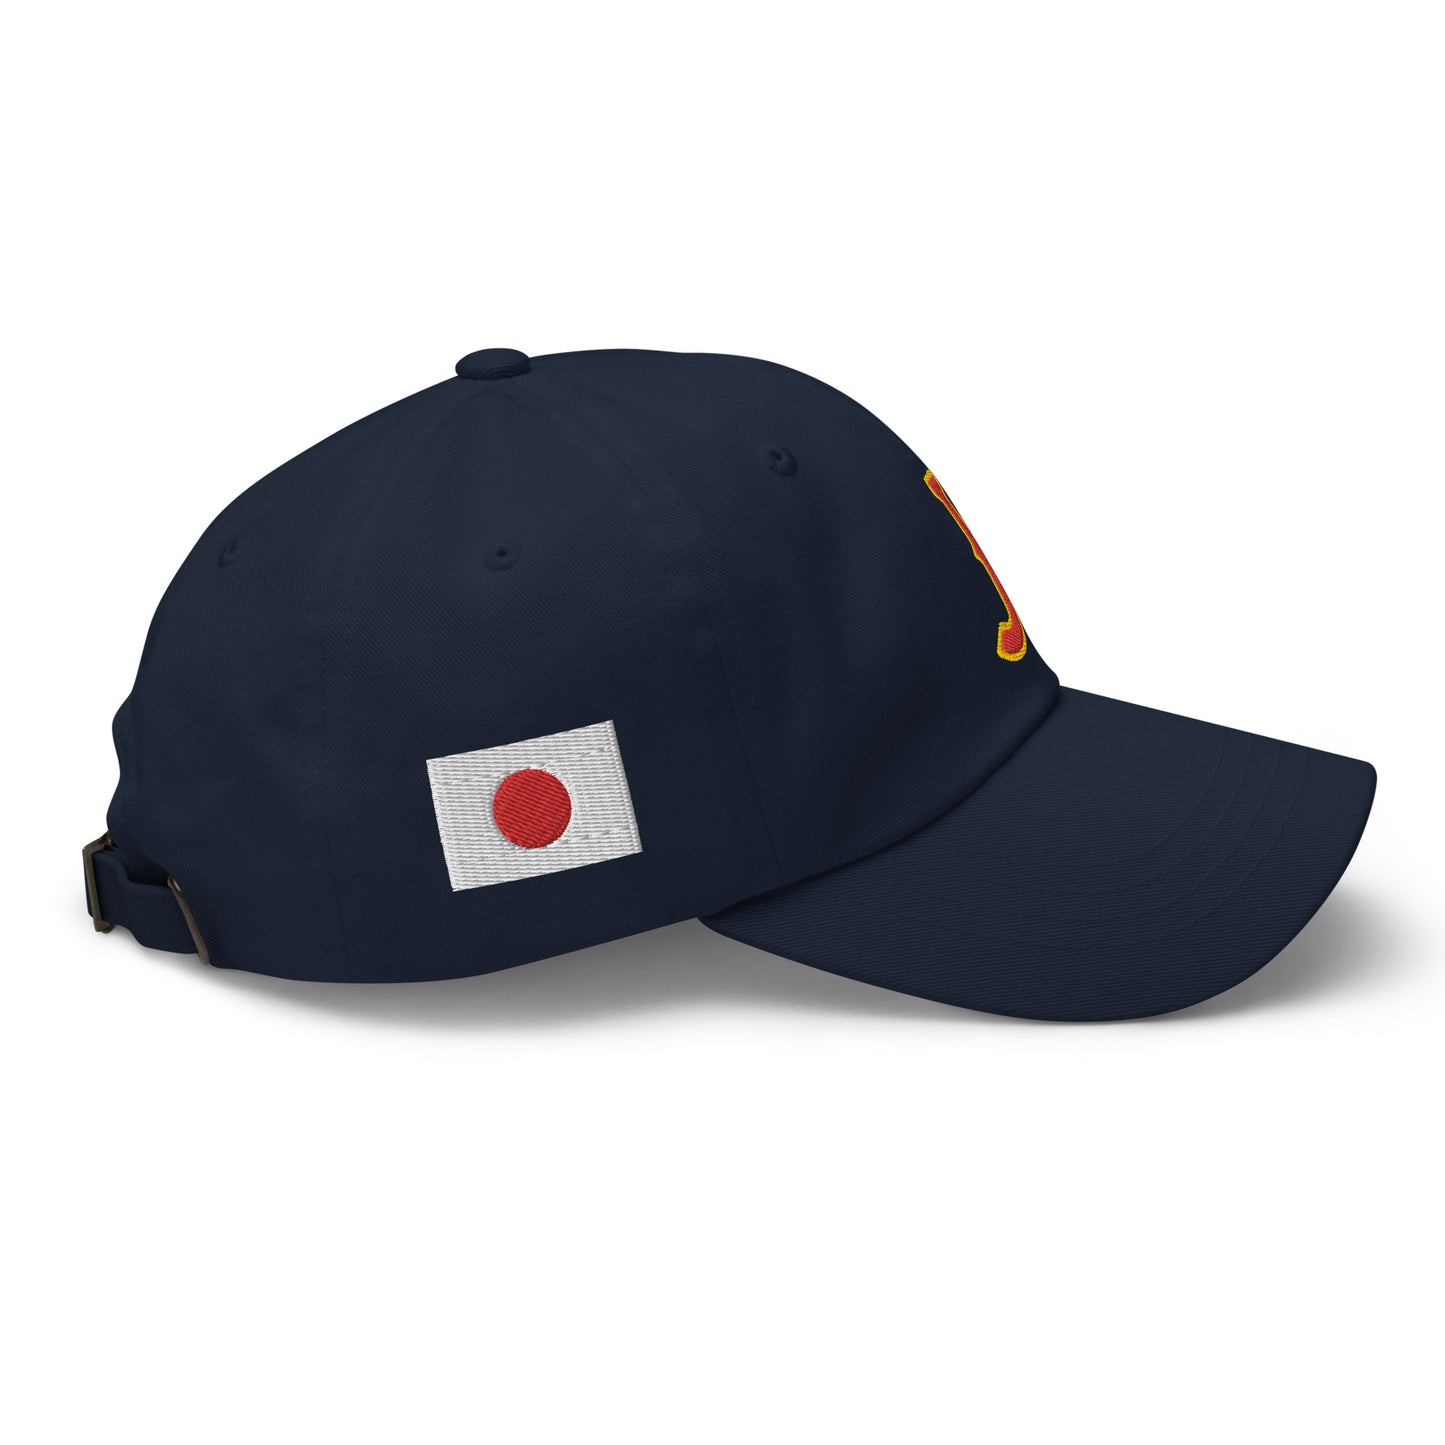 Team Japan Baseball Dad Hat